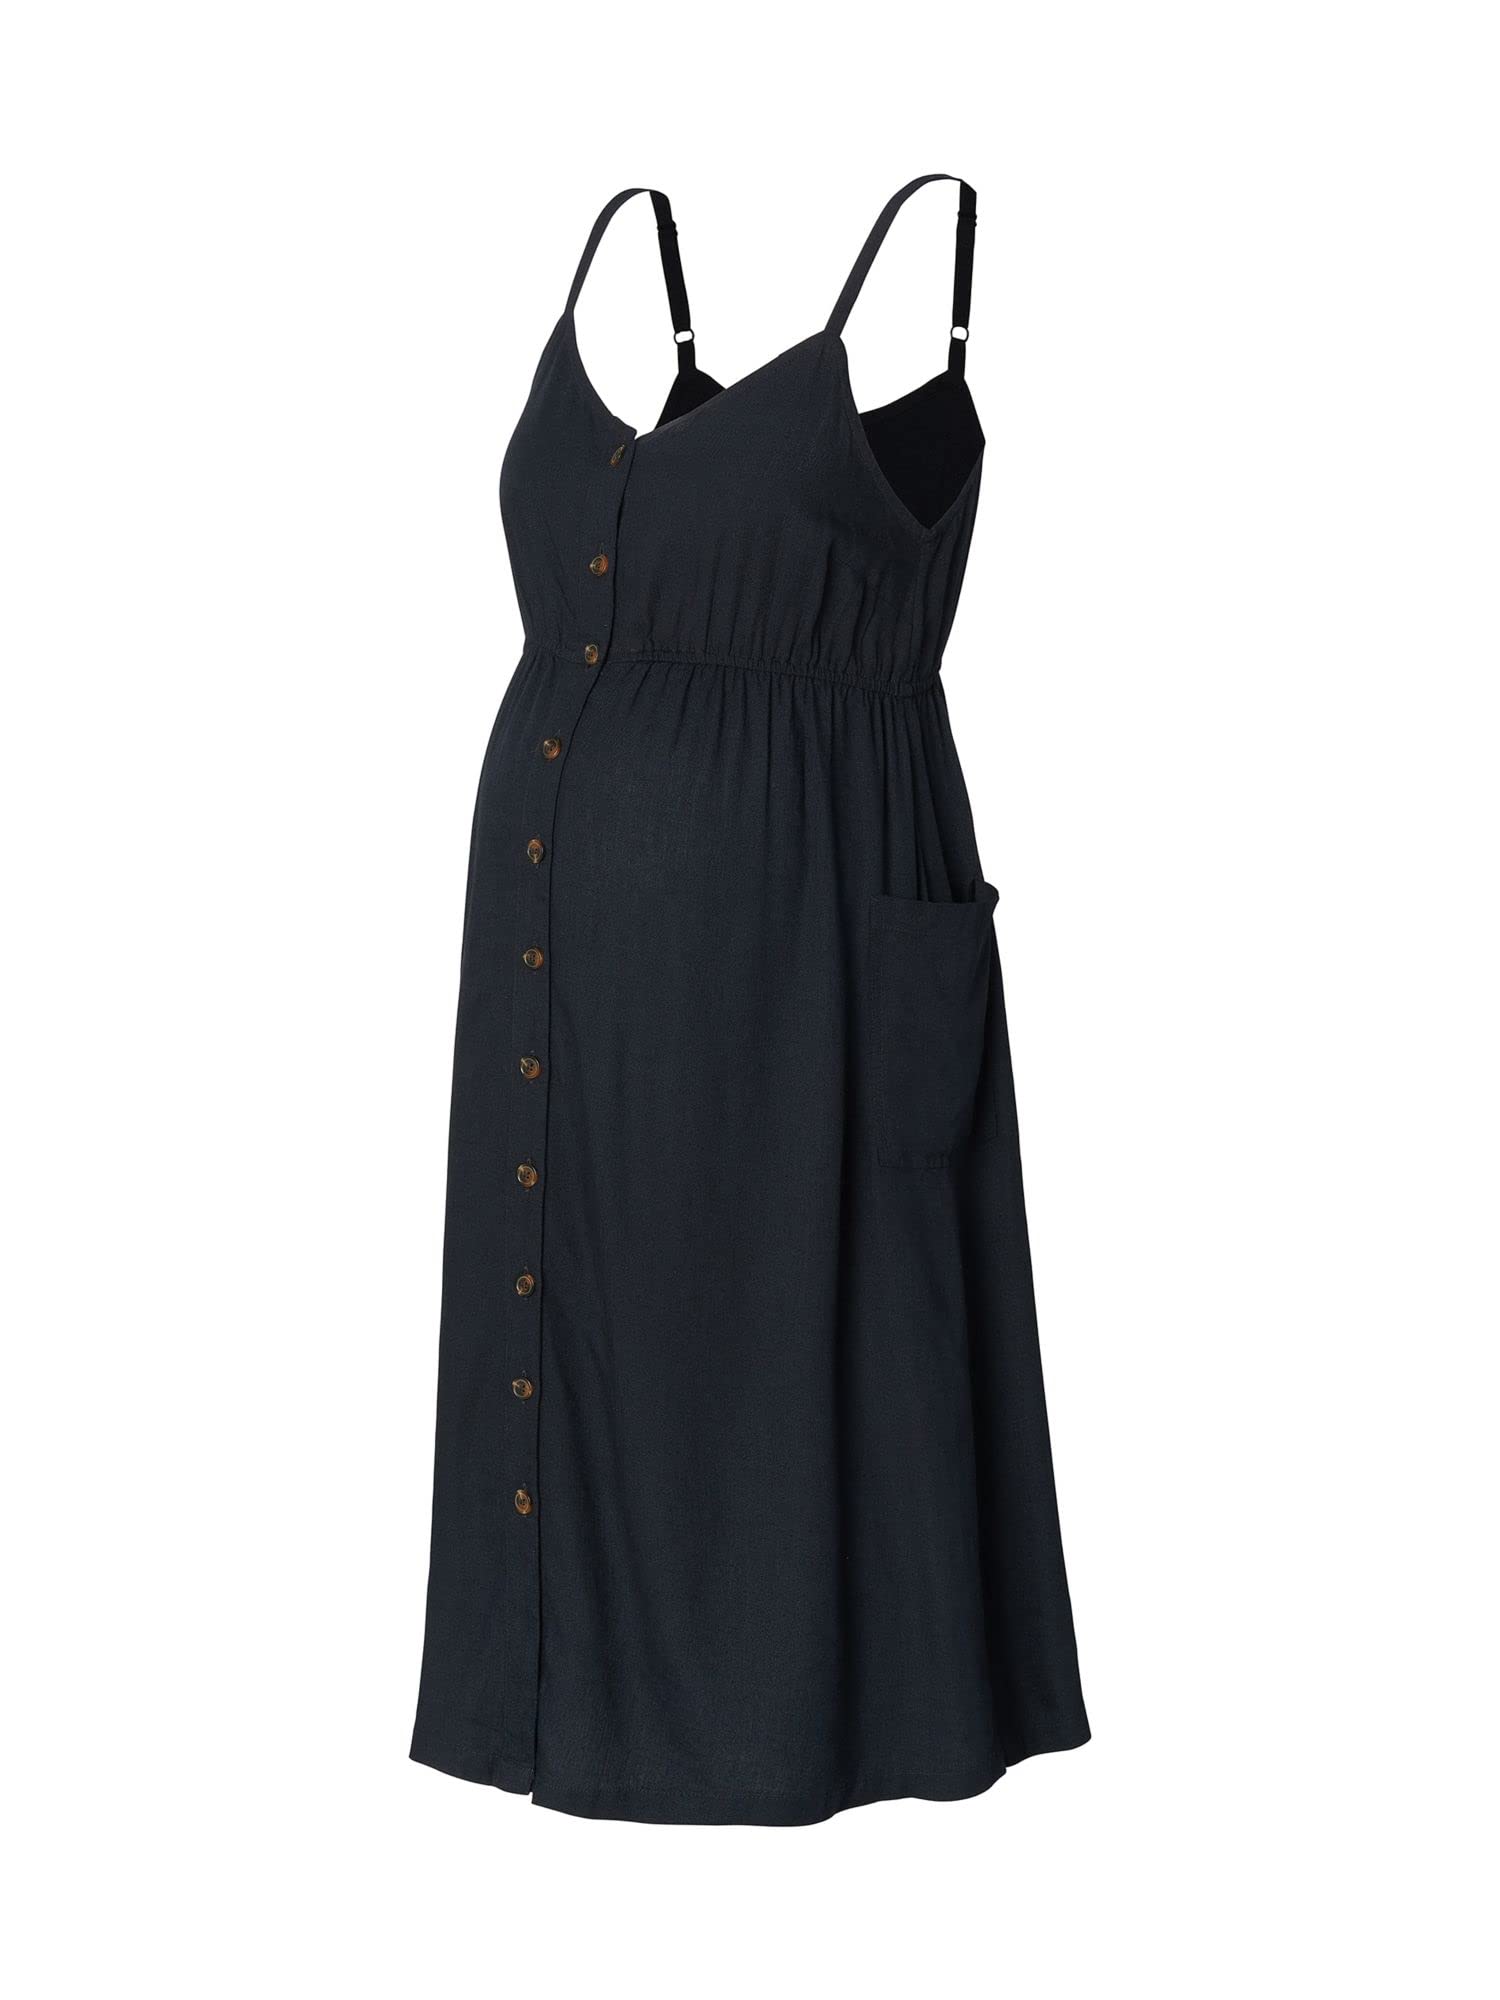 ESPRIT Damen Dress Woven Nursing Sleeveless Kleid, Schwarz-003, 34